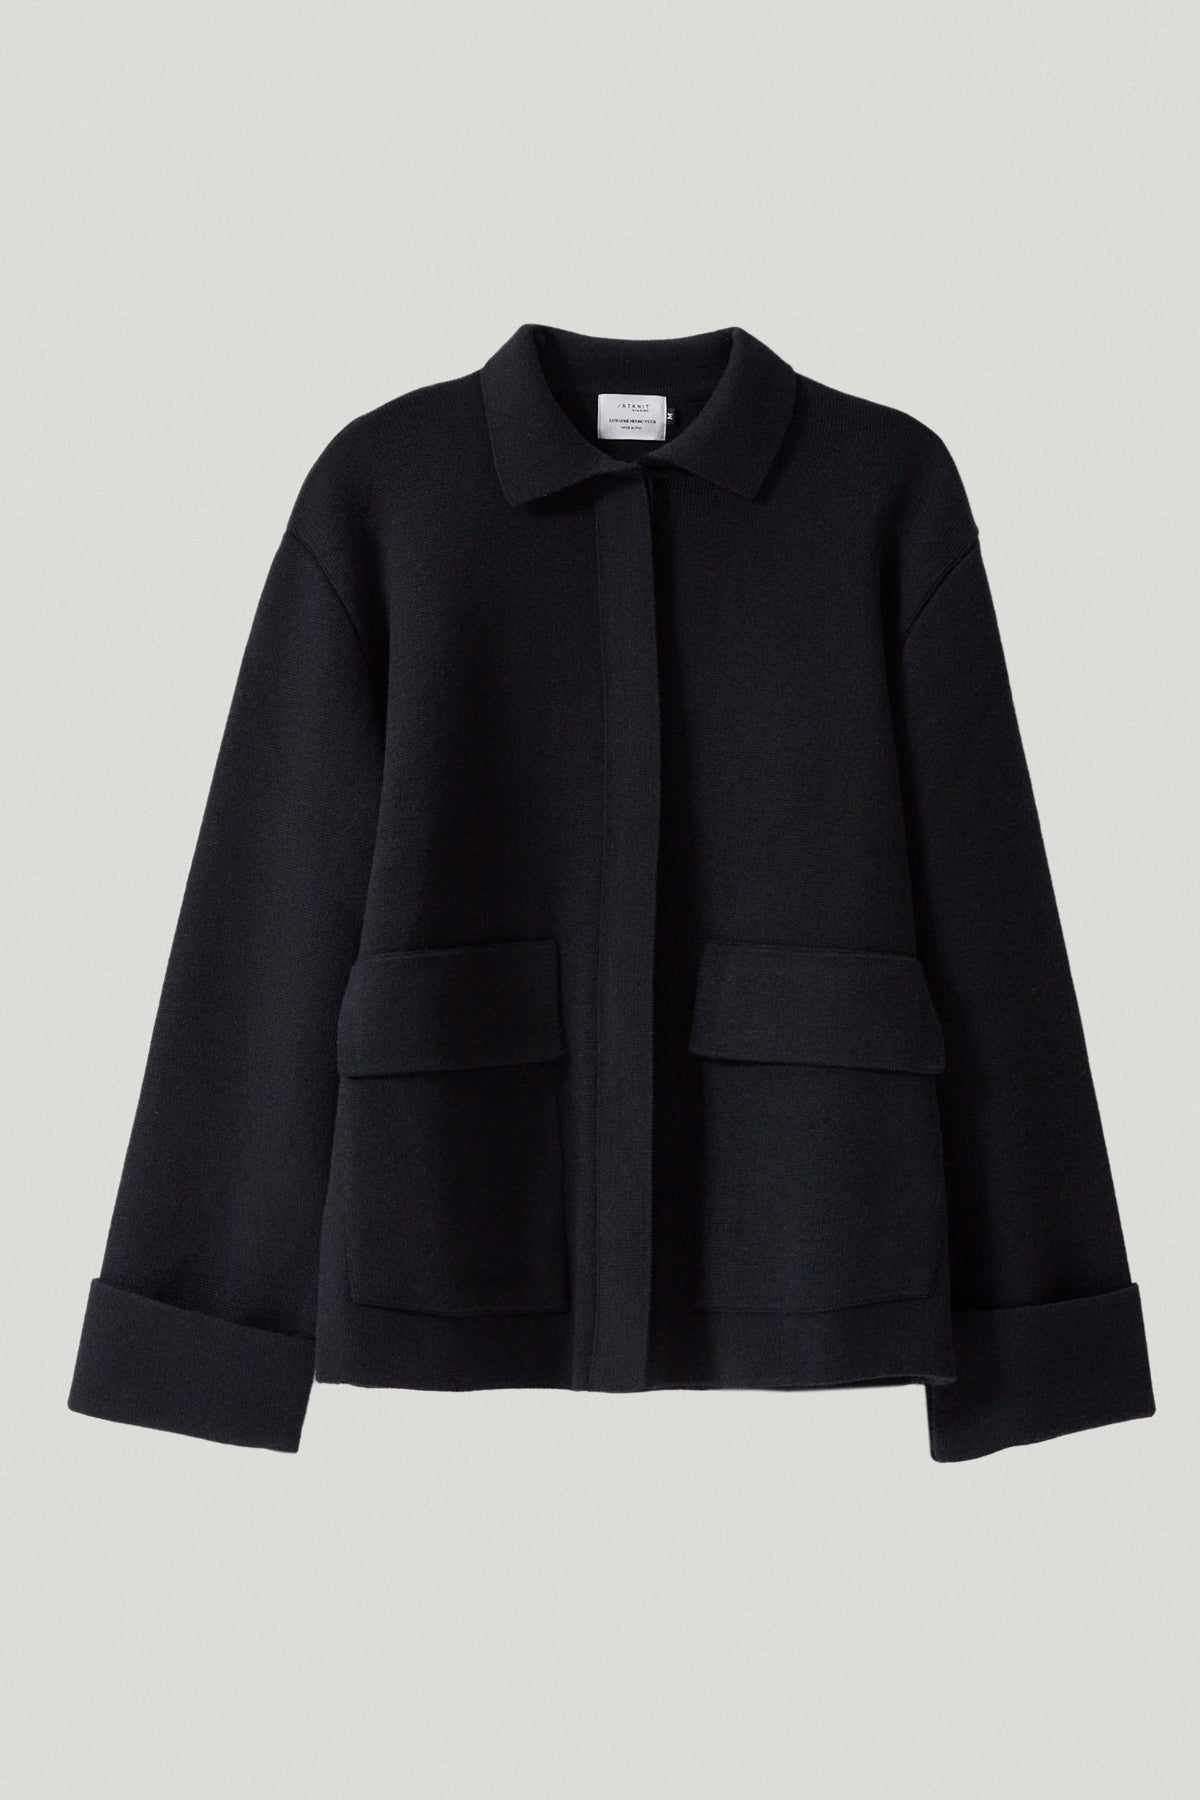 Black | The Merino Wool Jacket